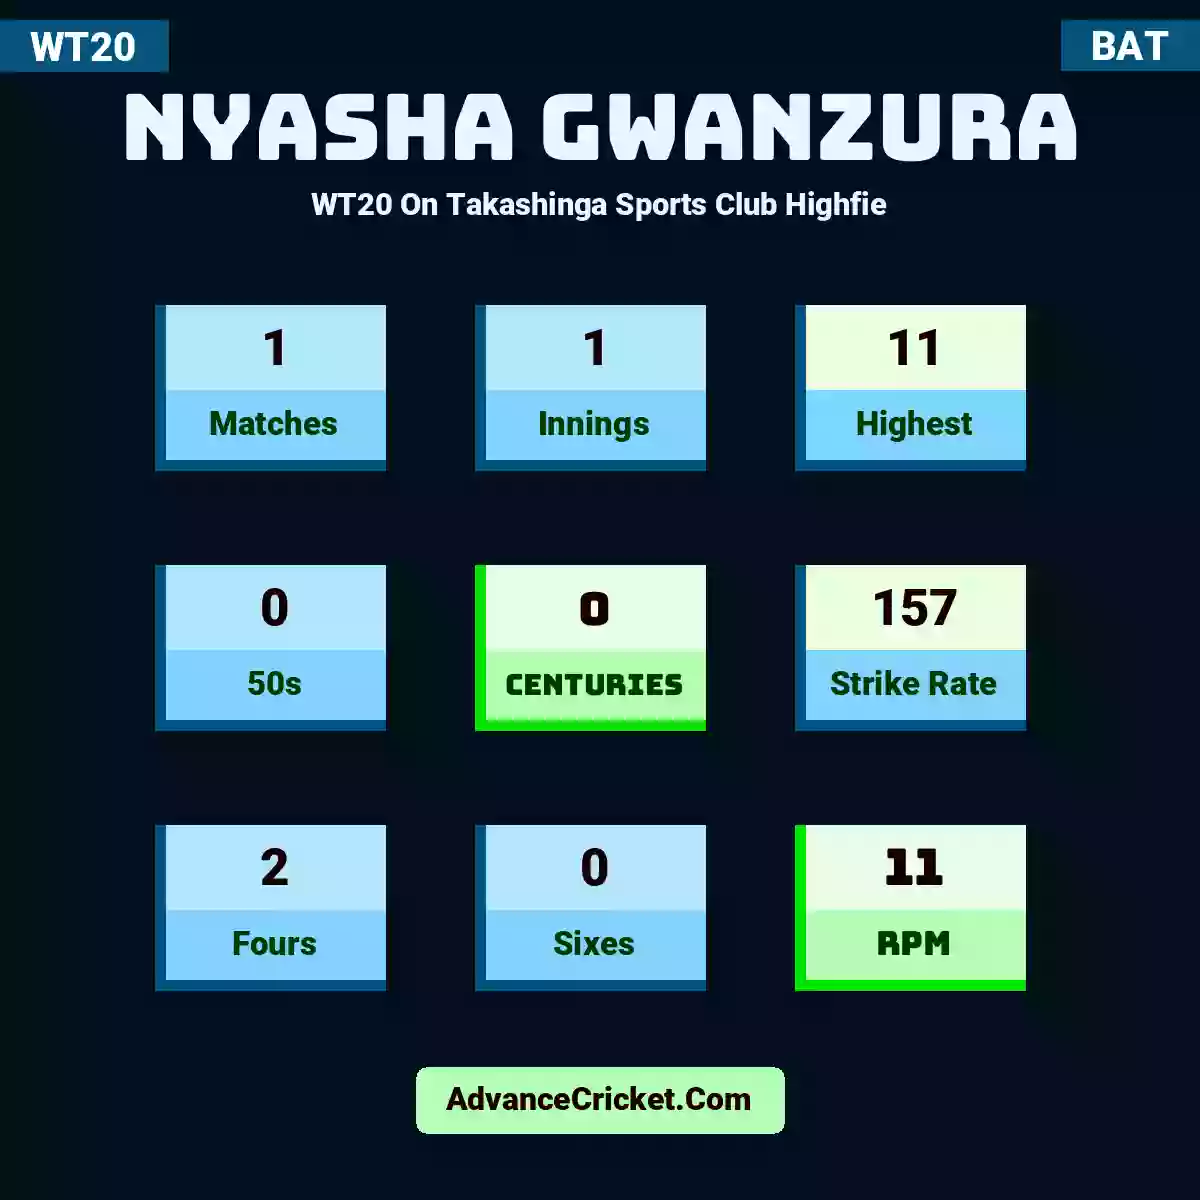 Nyasha Gwanzura WT20  On Takashinga Sports Club Highfie, Nyasha Gwanzura played 1 matches, scored 11 runs as highest, 0 half-centuries, and 0 centuries, with a strike rate of 157. N.Gwanzura hit 2 fours and 0 sixes, with an RPM of 11.